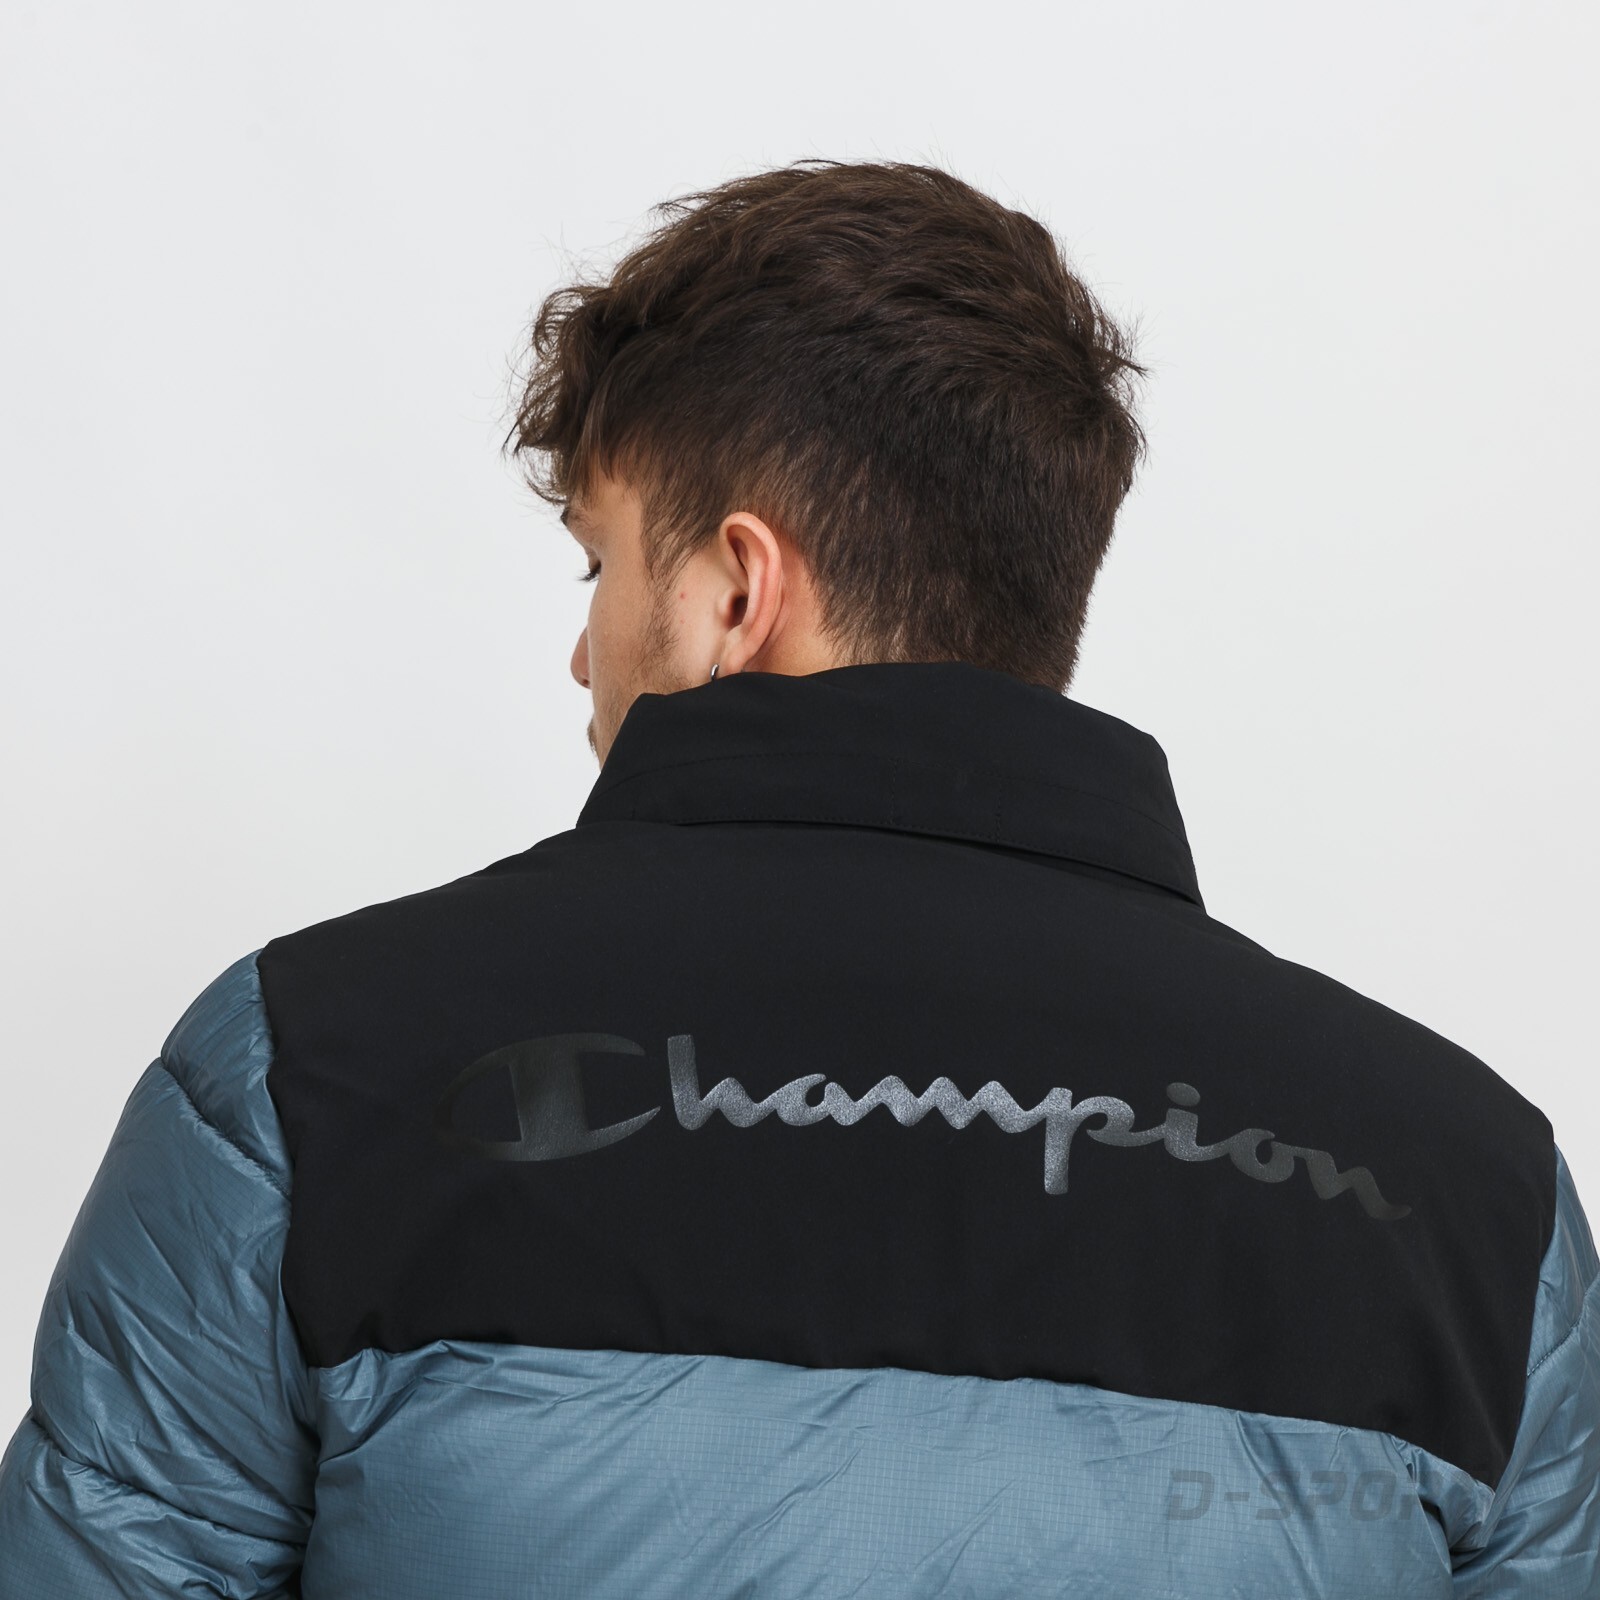 Champion Jacket